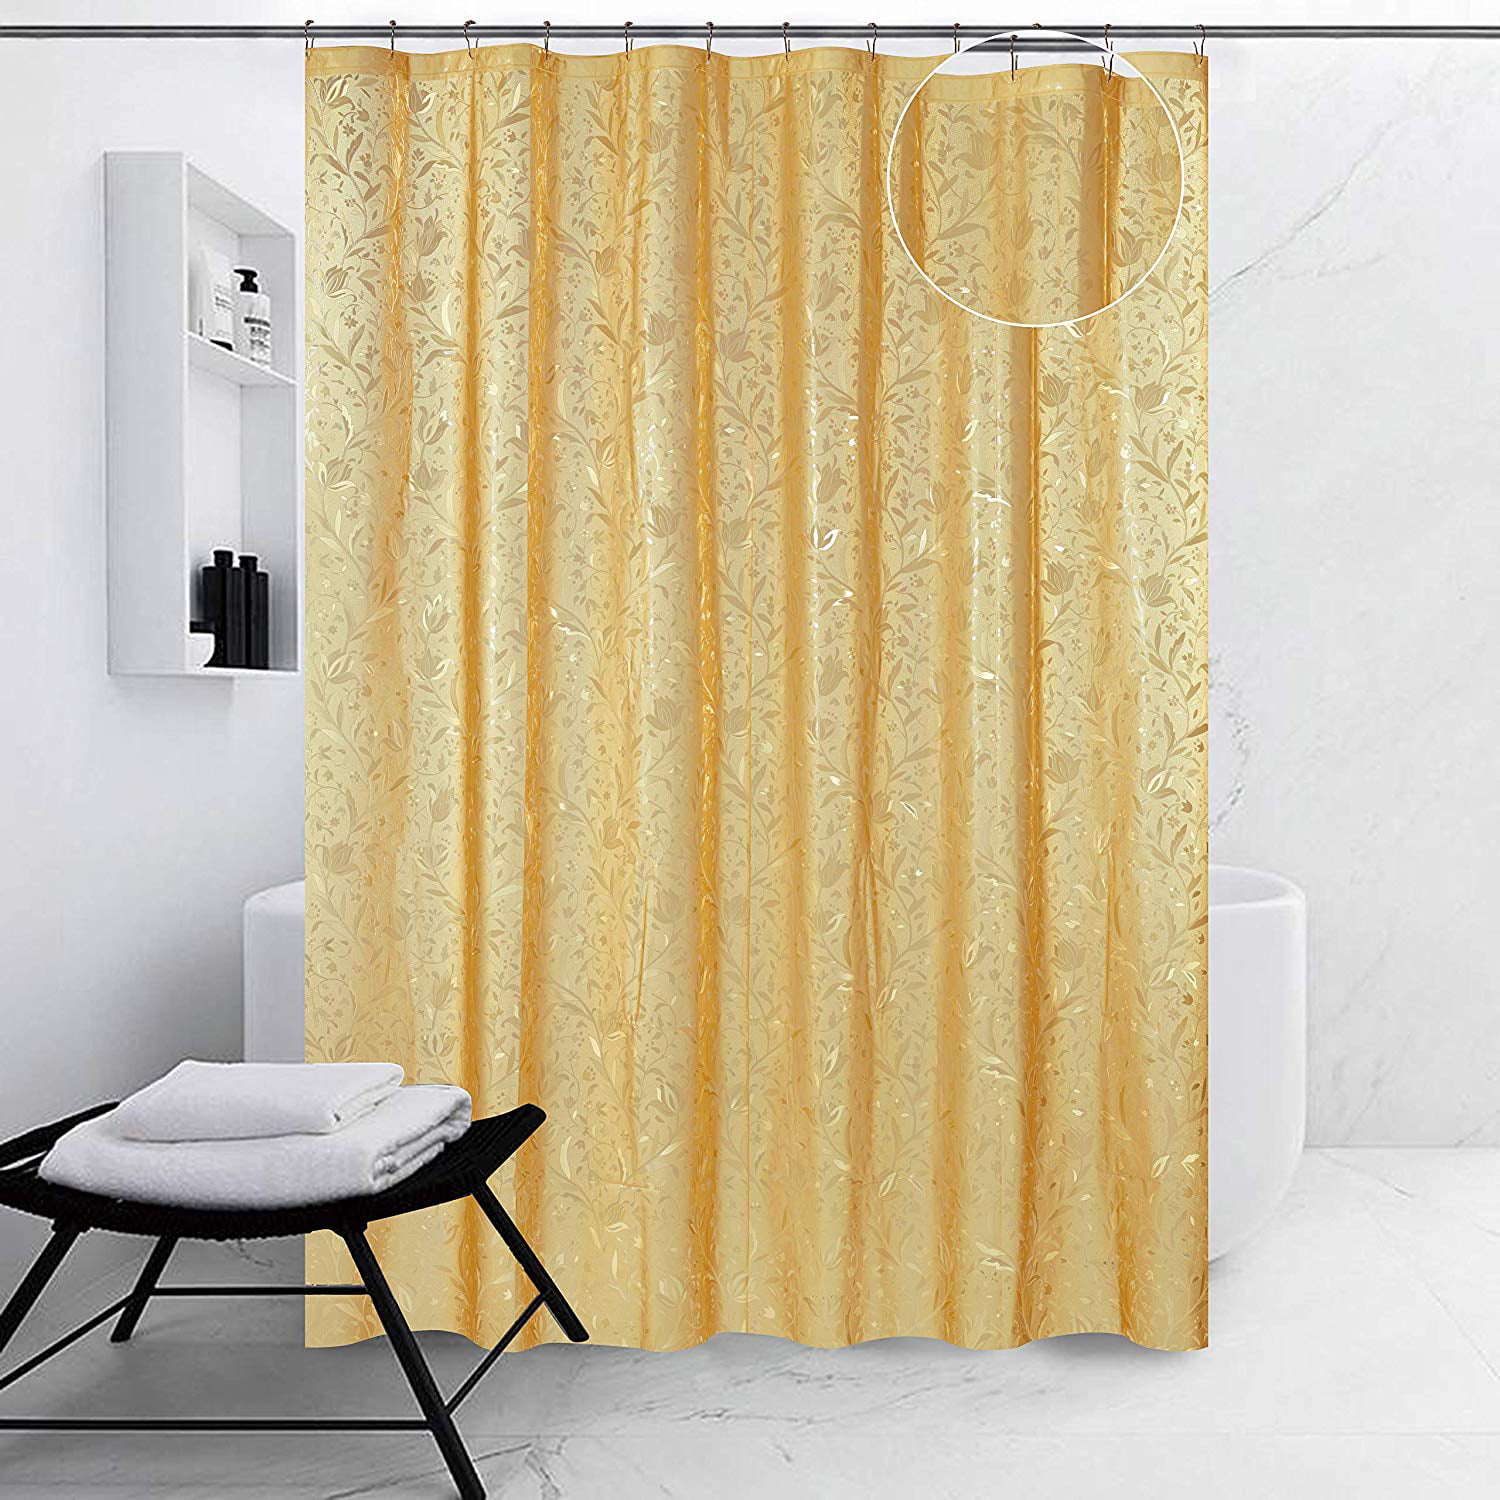 Intelligent Design Printed Cute Youth Bathroom Shower Curtain Mildew Resistant Quick Dry Modern Looking Bath-Curtain 72x72 Tasia Green ID70-284